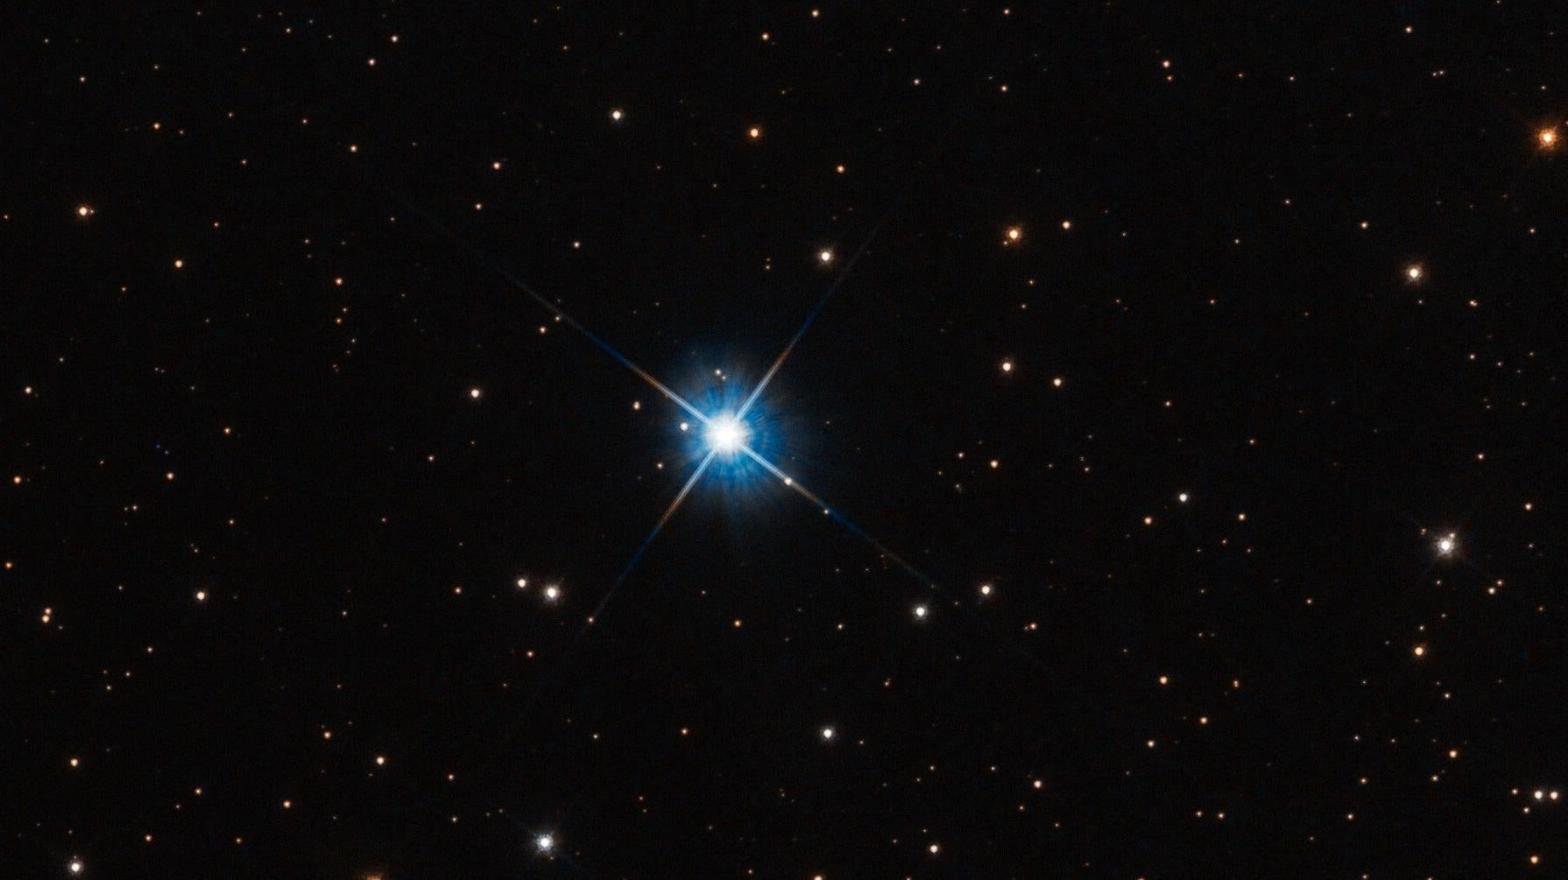 A view of LAWD 37 as seen by Hubble. (Image: NASA, ESA, P. McGill (Univ. of California, Santa Cruz and University of Cambridge), K. Sahu (STScI), J. Depasquale (STScI))